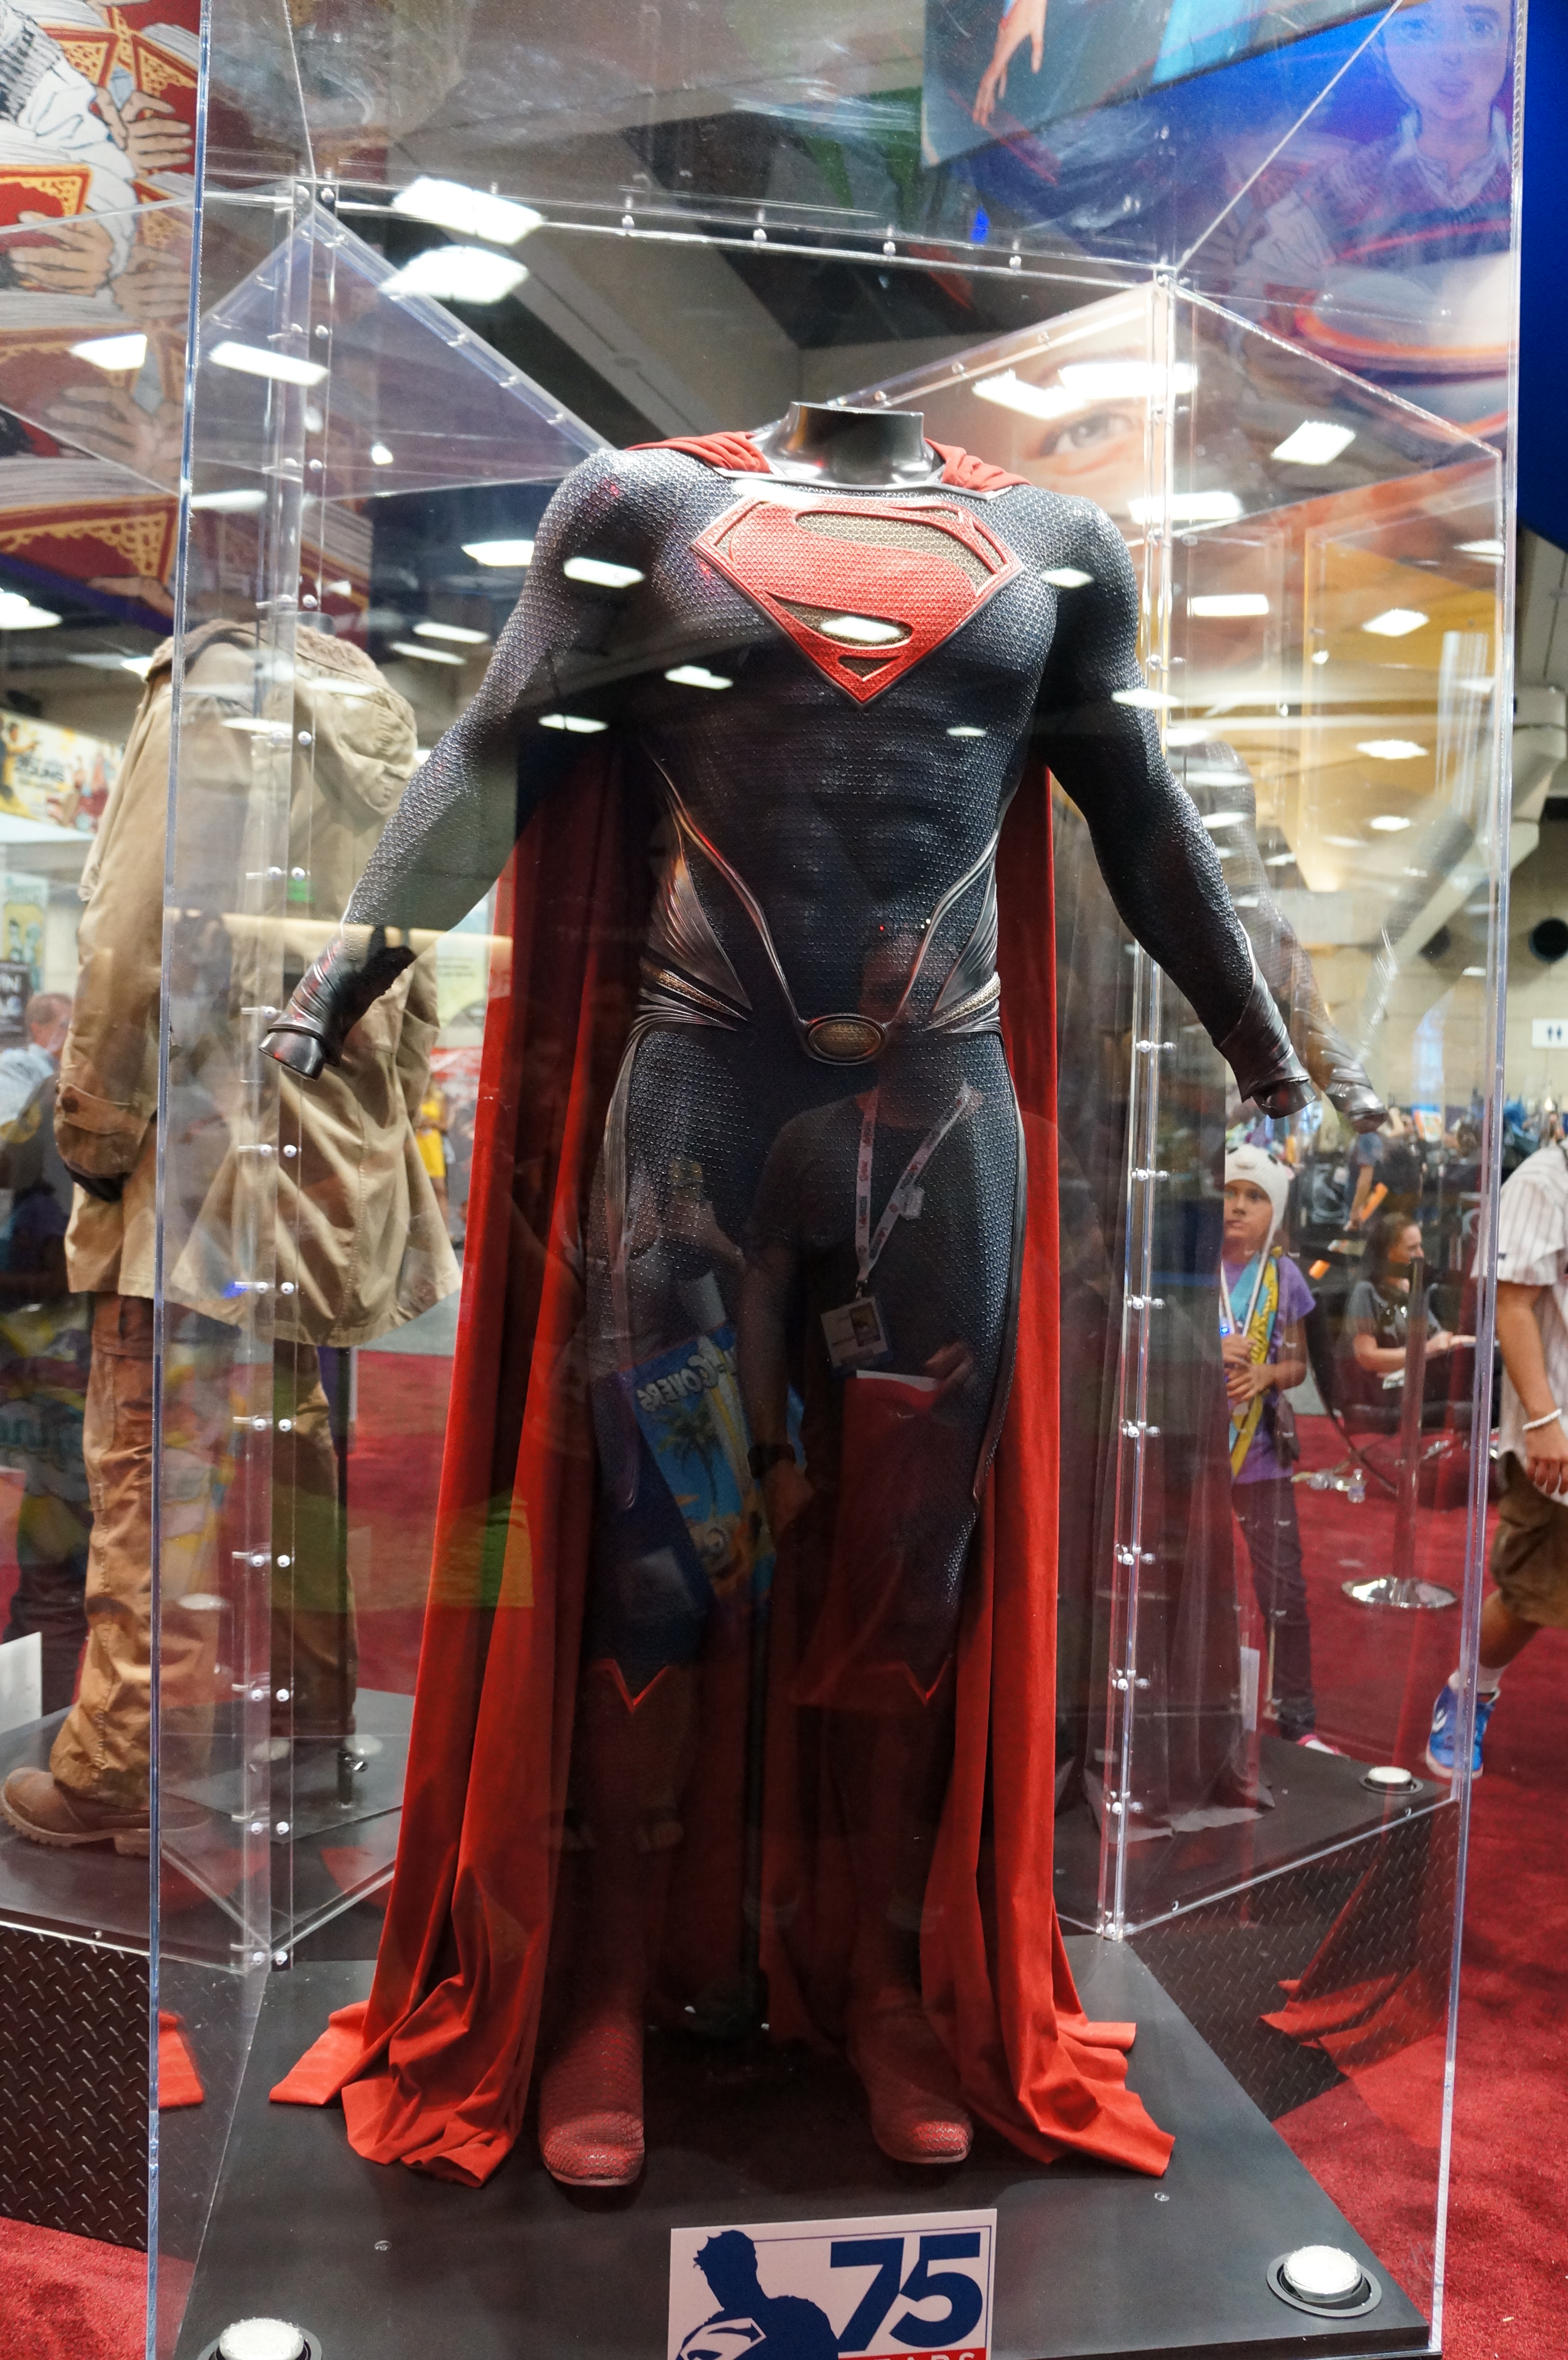 File:Superman Costumes (9407462138).jpg - Wikipedia